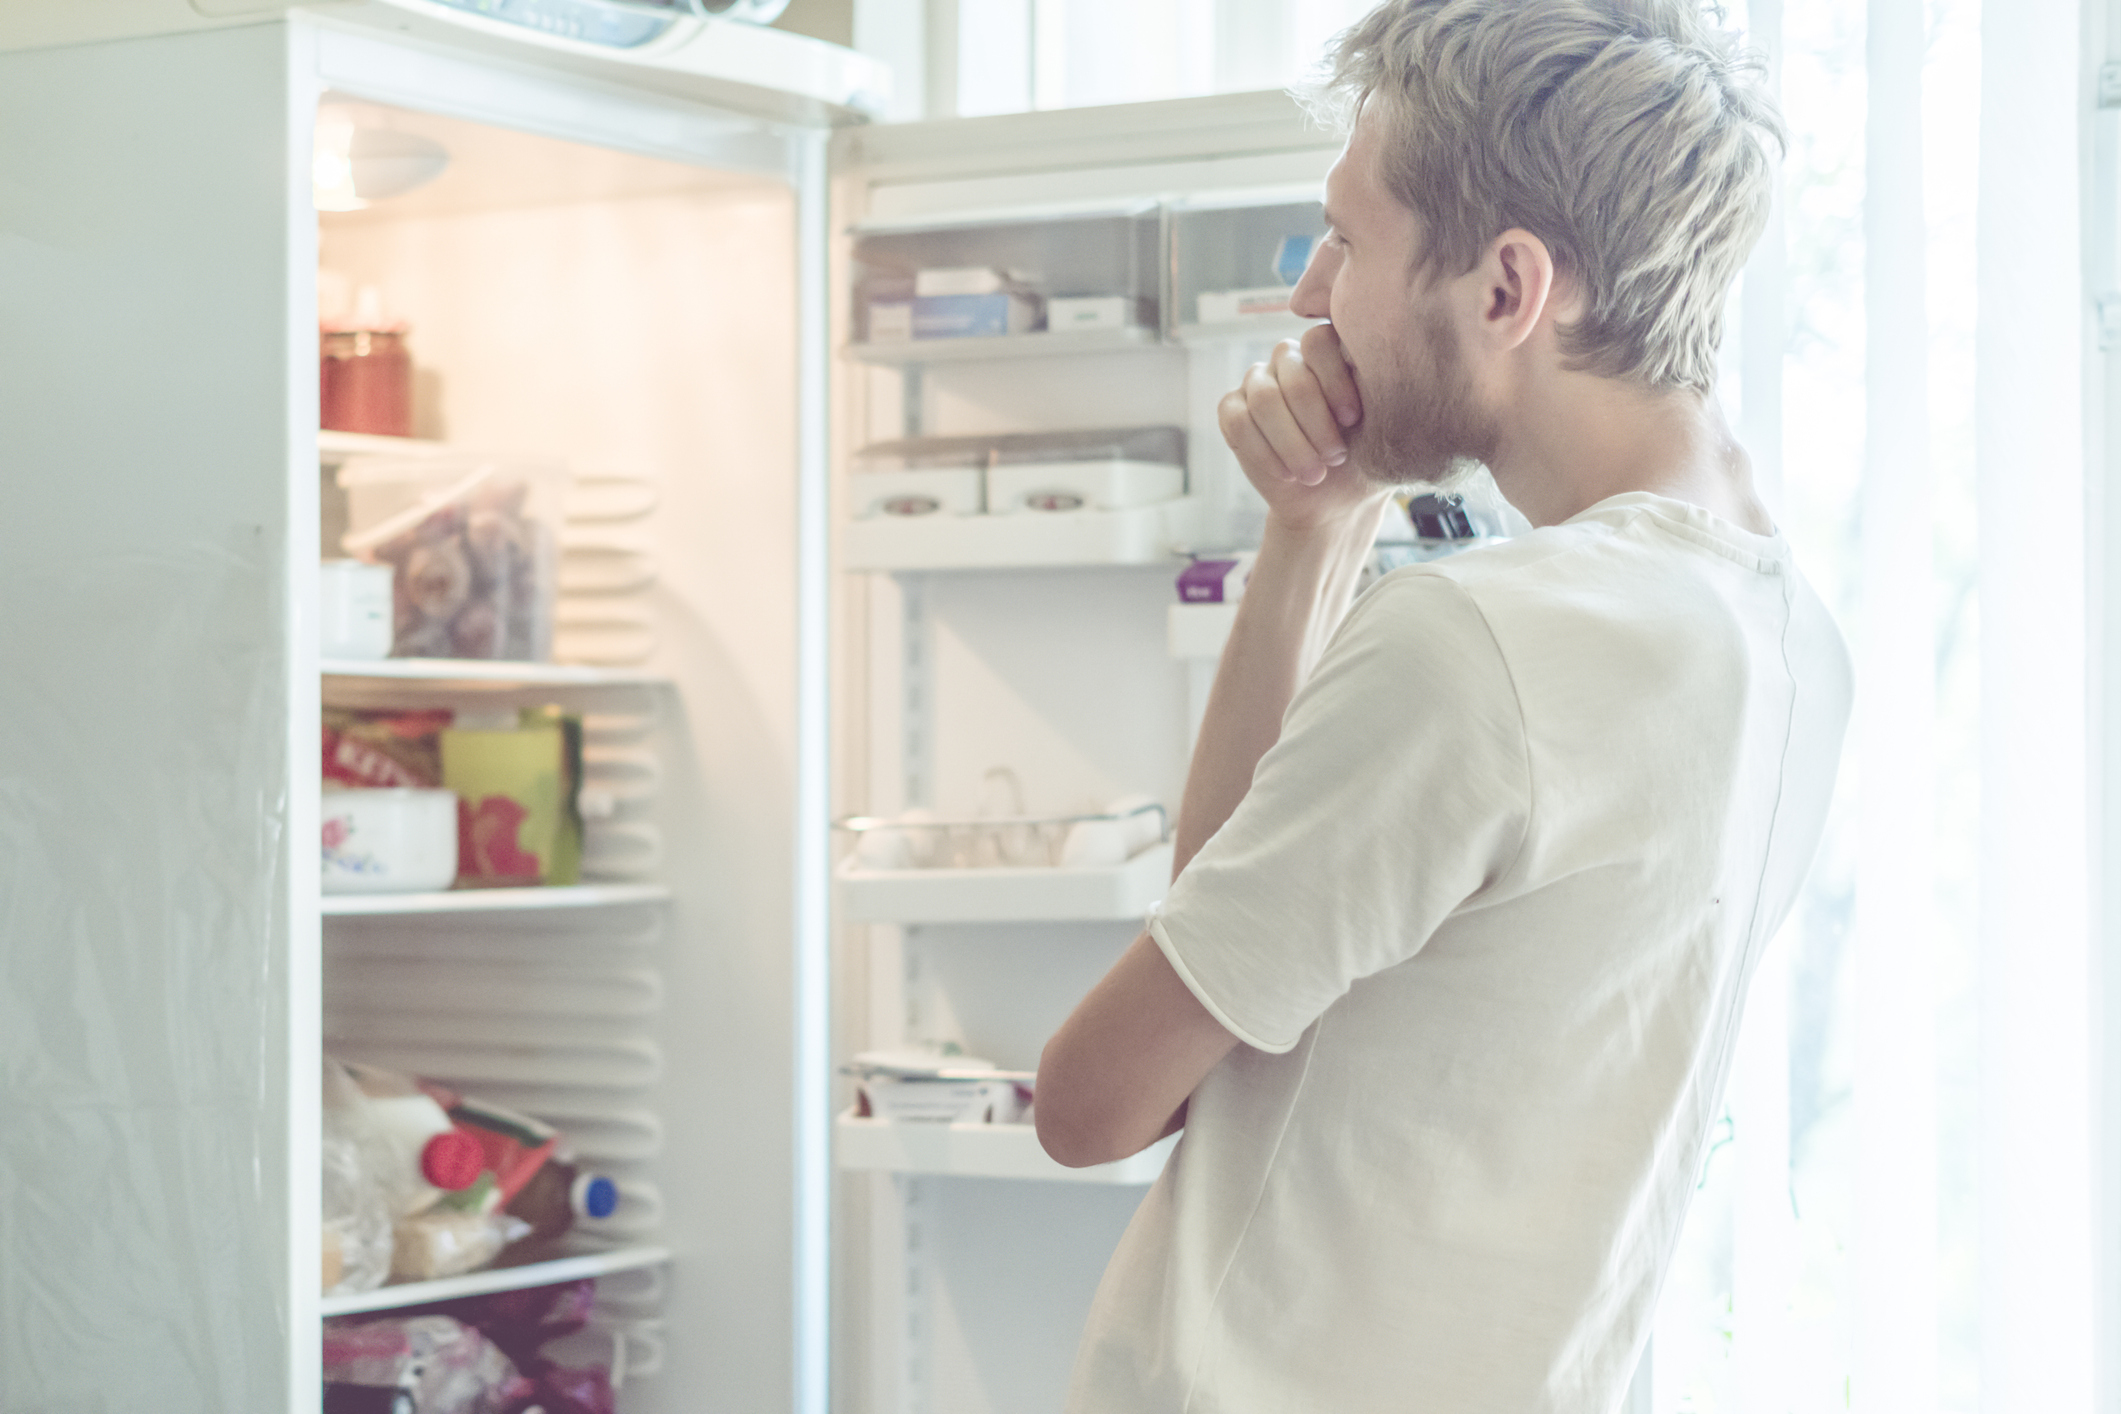 Mann blickt ratlos in offenen Kühlschrank